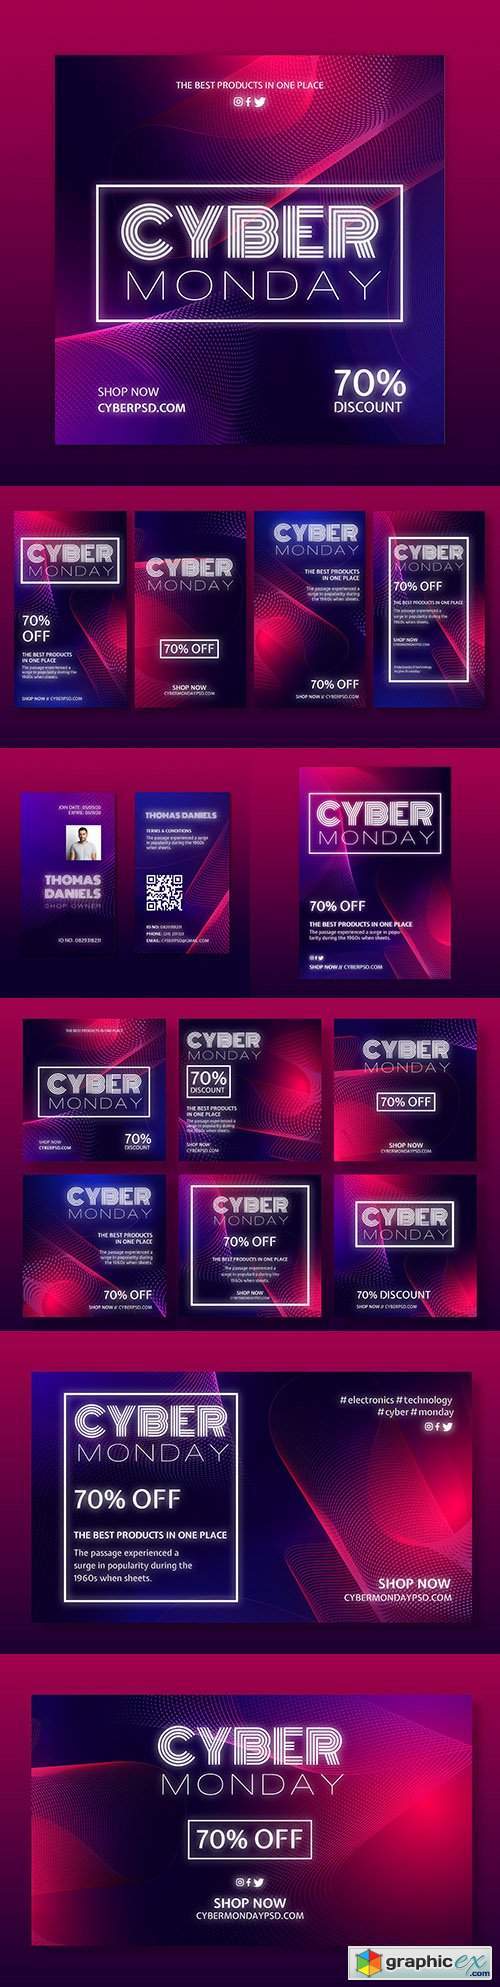 Cyber Monday sale design illustration template